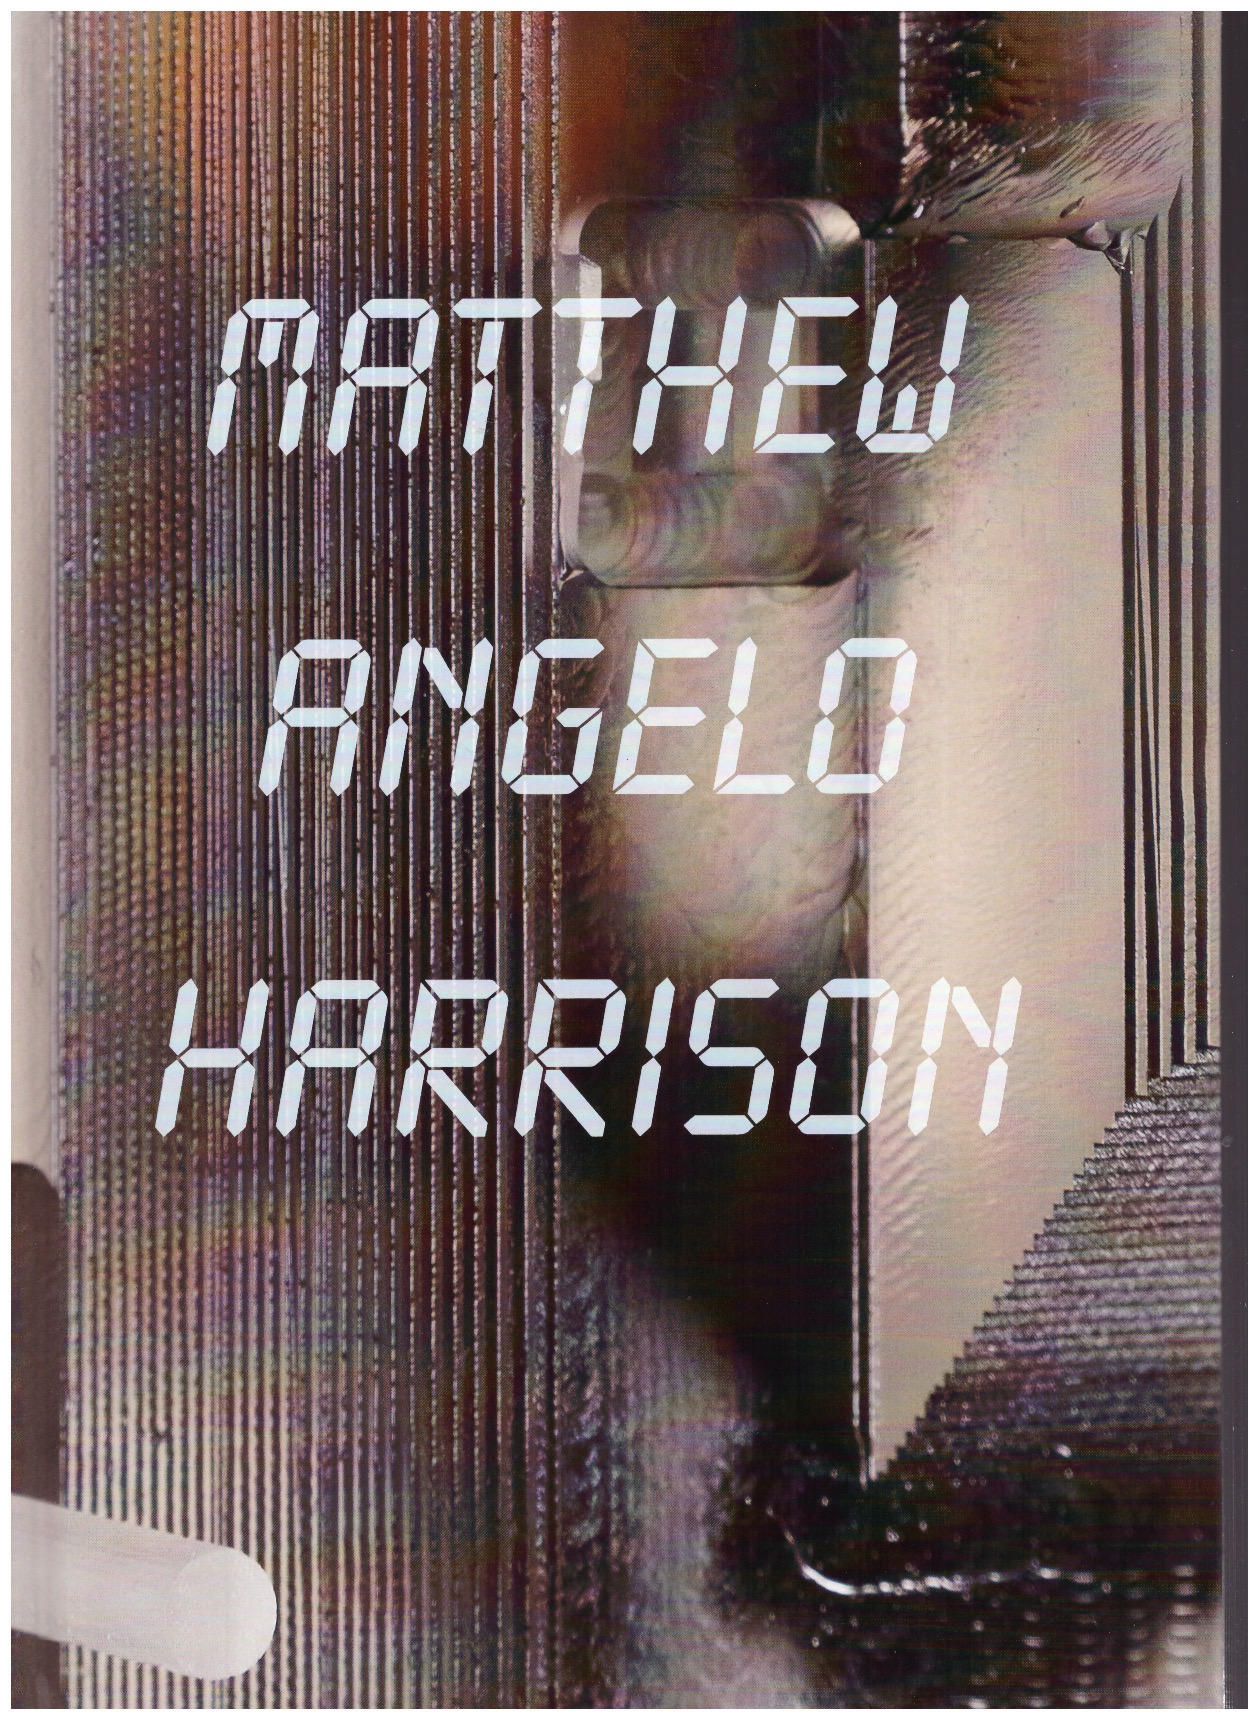 ANGELO HARRISON, Mathew; BELL, Natalie (ed.); FILIPOVIC, Elena (ed.) - Mathew Angelo Harrison